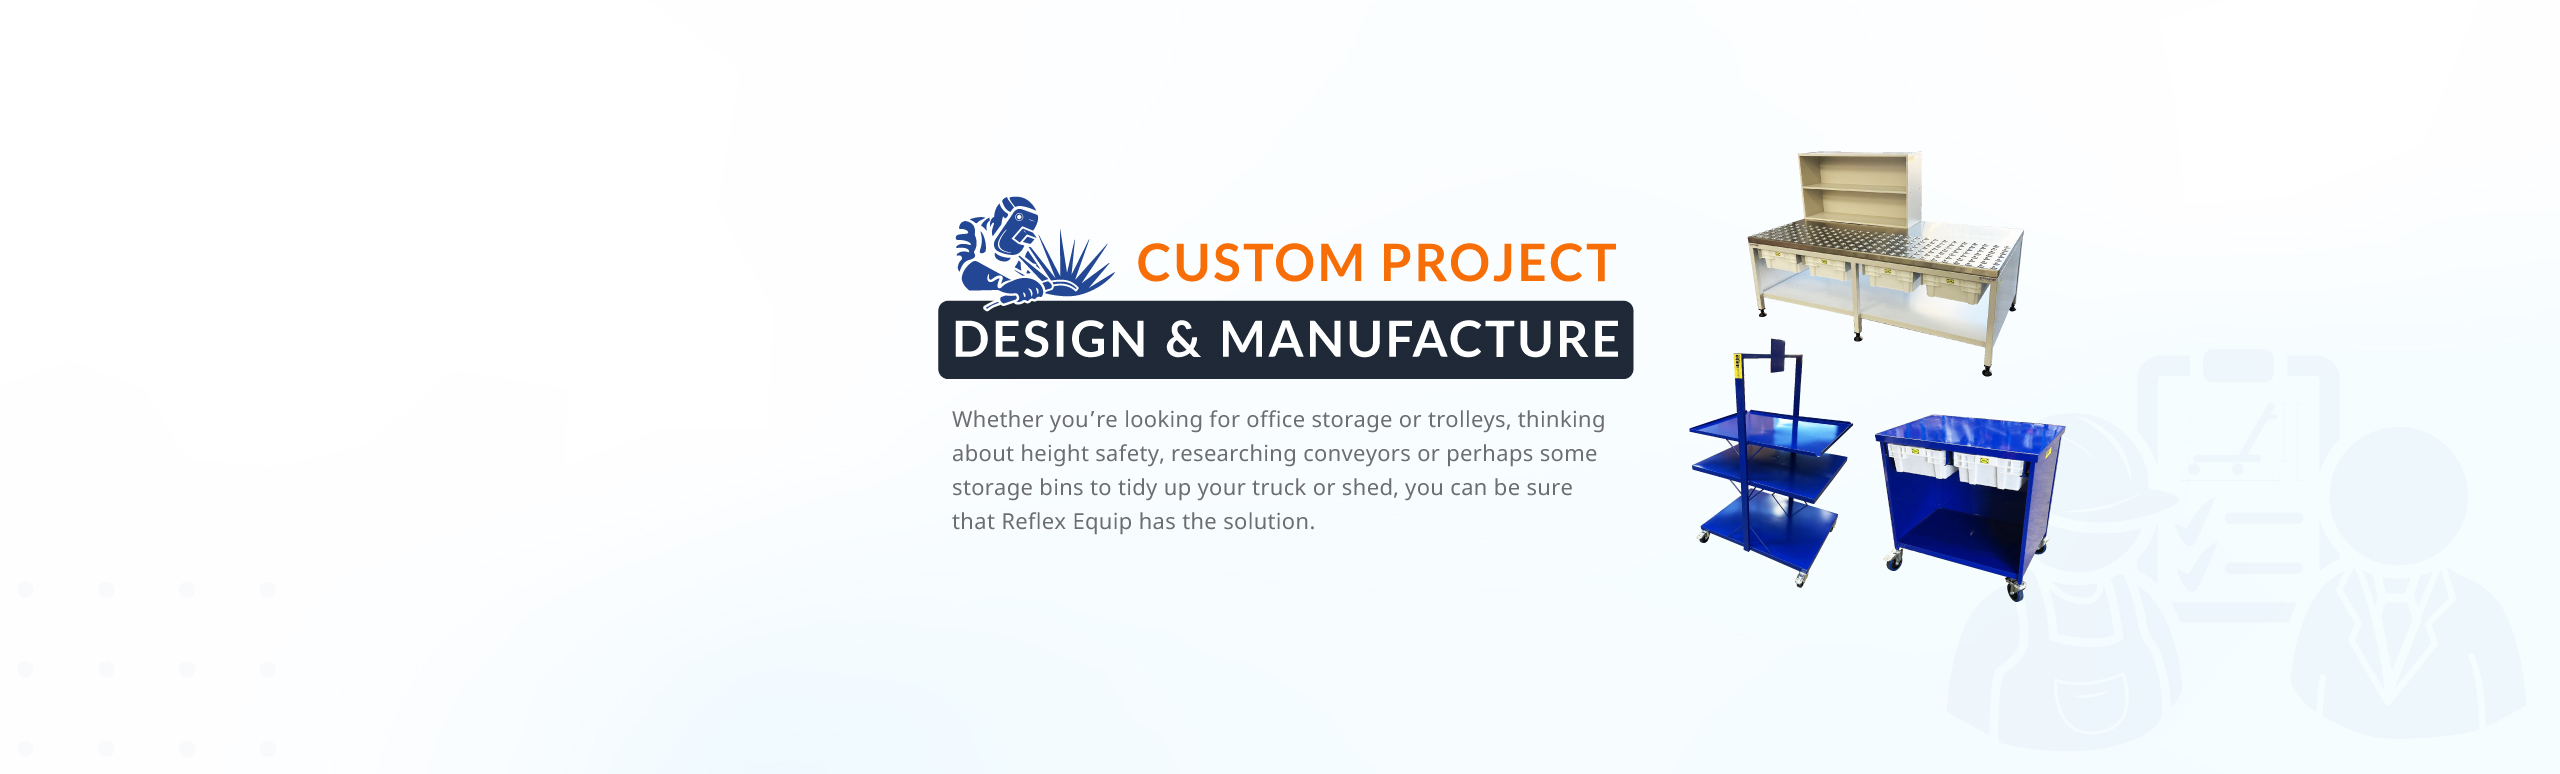 Custom Project - Representatives Service